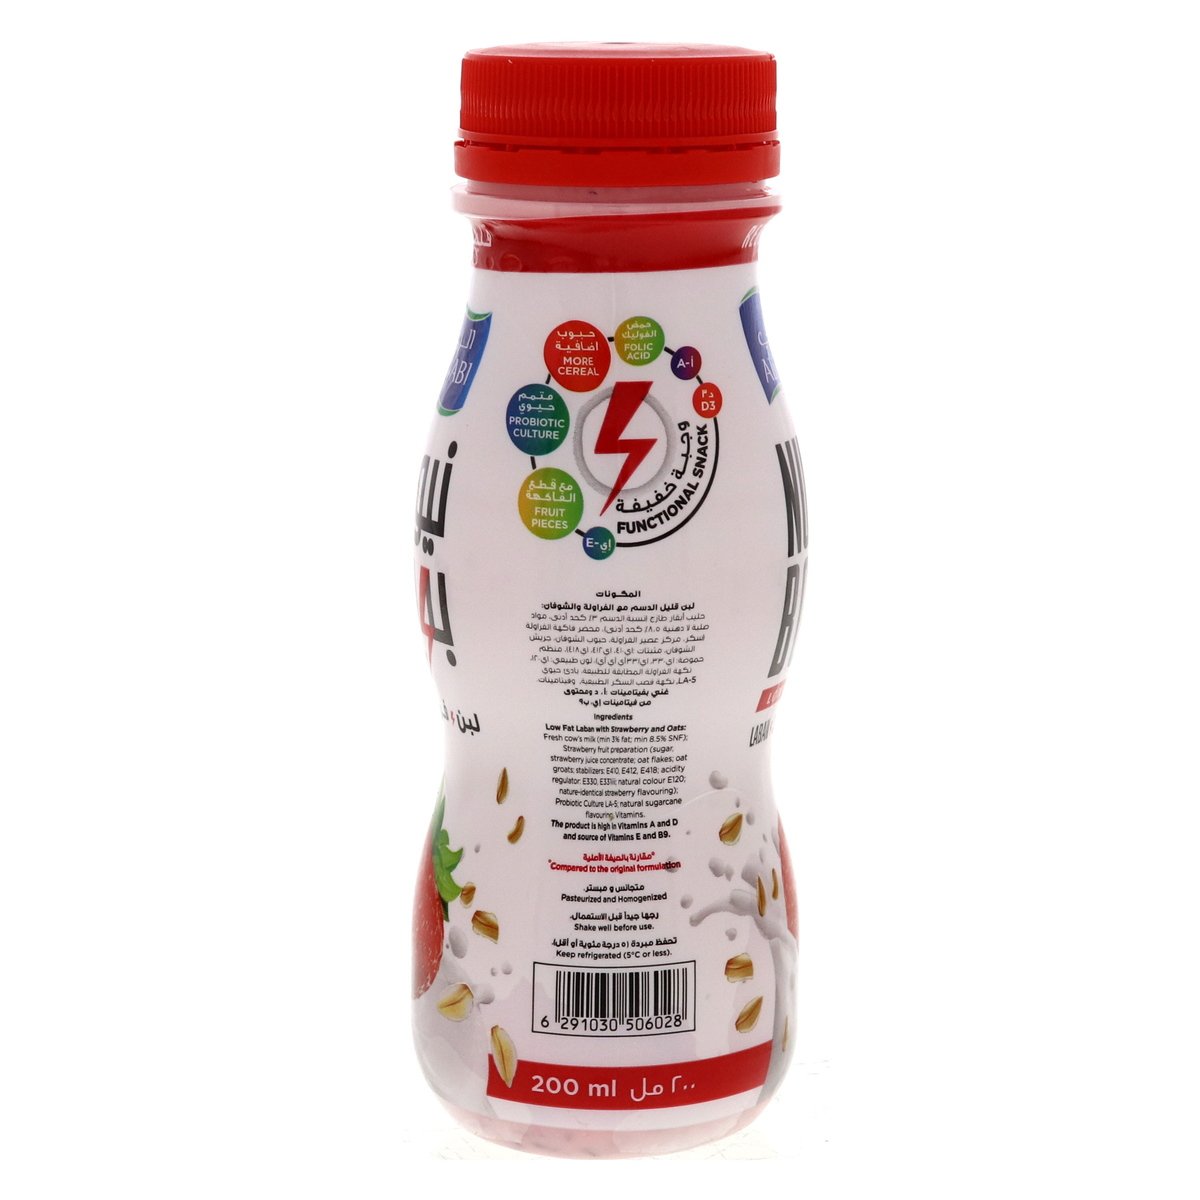 Al Rawabi Nutree Boost Laban With Strawberry & Oats, 200 ml